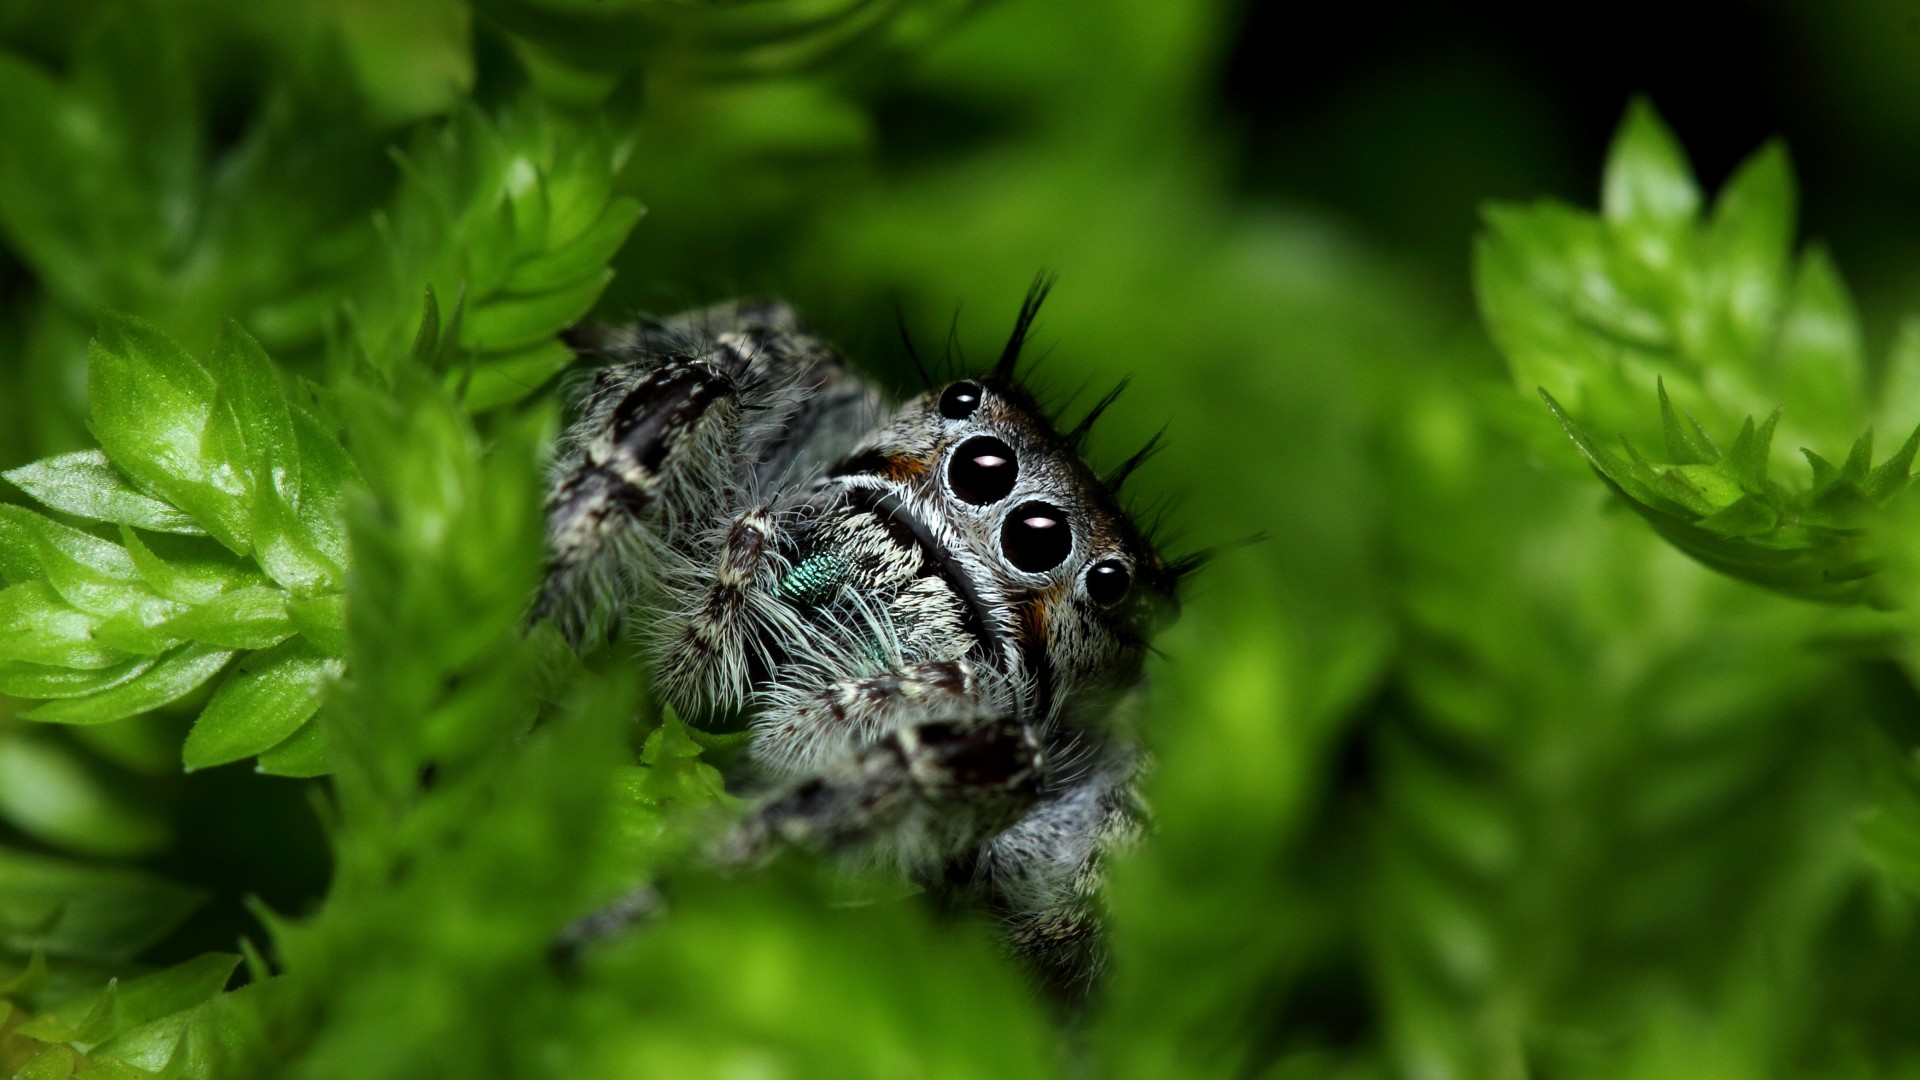 прыгающий паук, глаза, природа, насекомые, зеленый, милый, Jumping Spider, eyes, insects, leaves, green, nature, cute (horizontal)